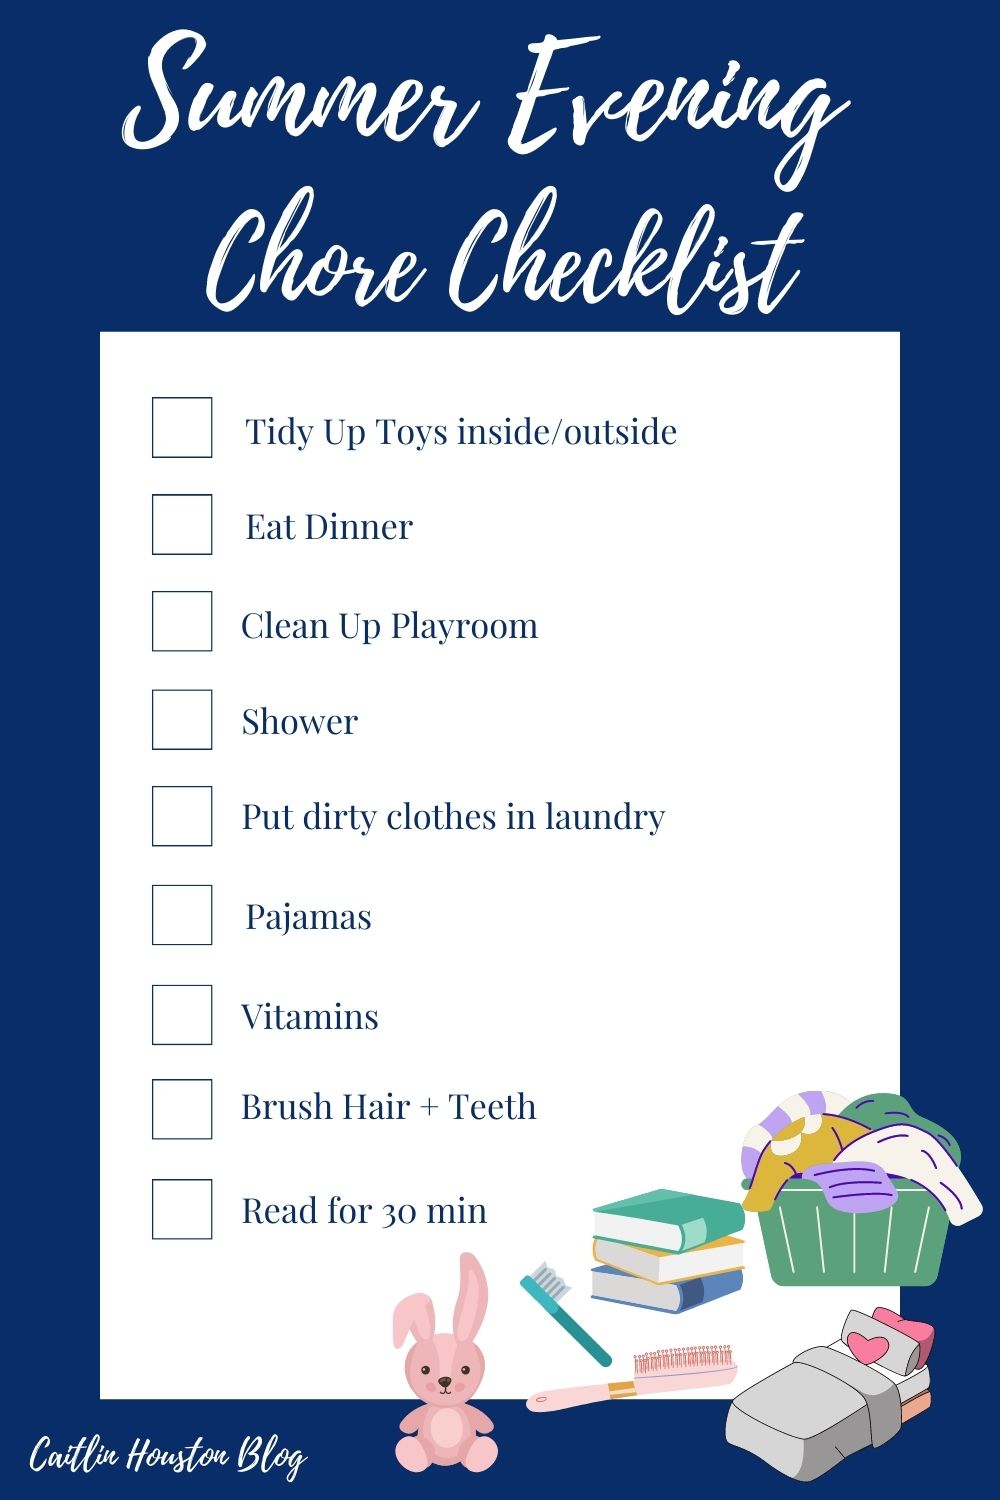 Summer Evening Chore Checklist